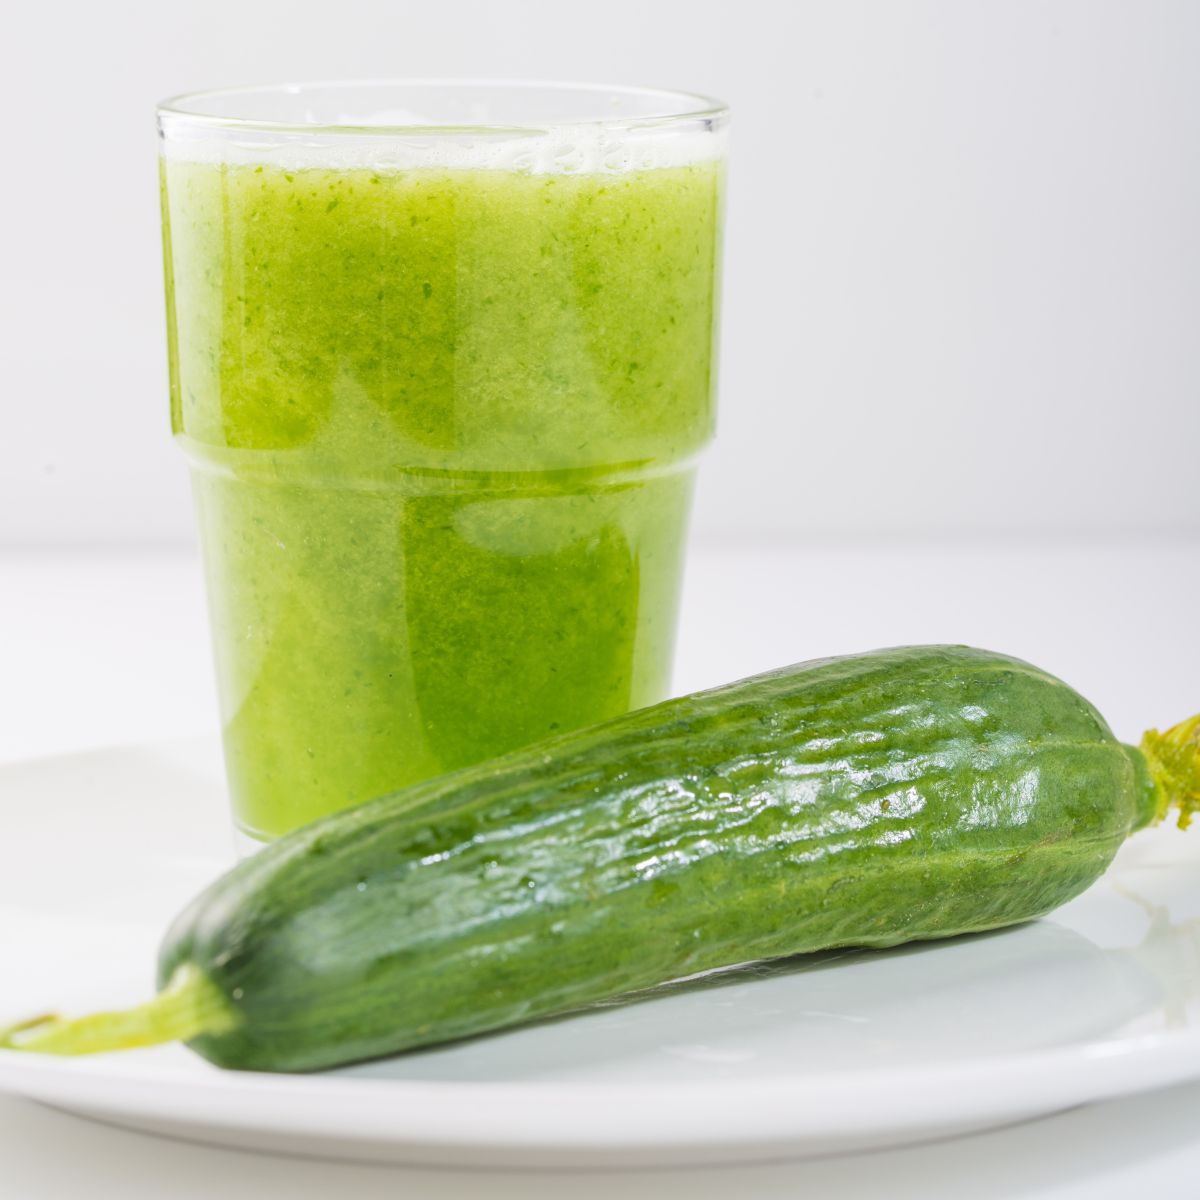 a cucumber next to a glass of cucumber juice